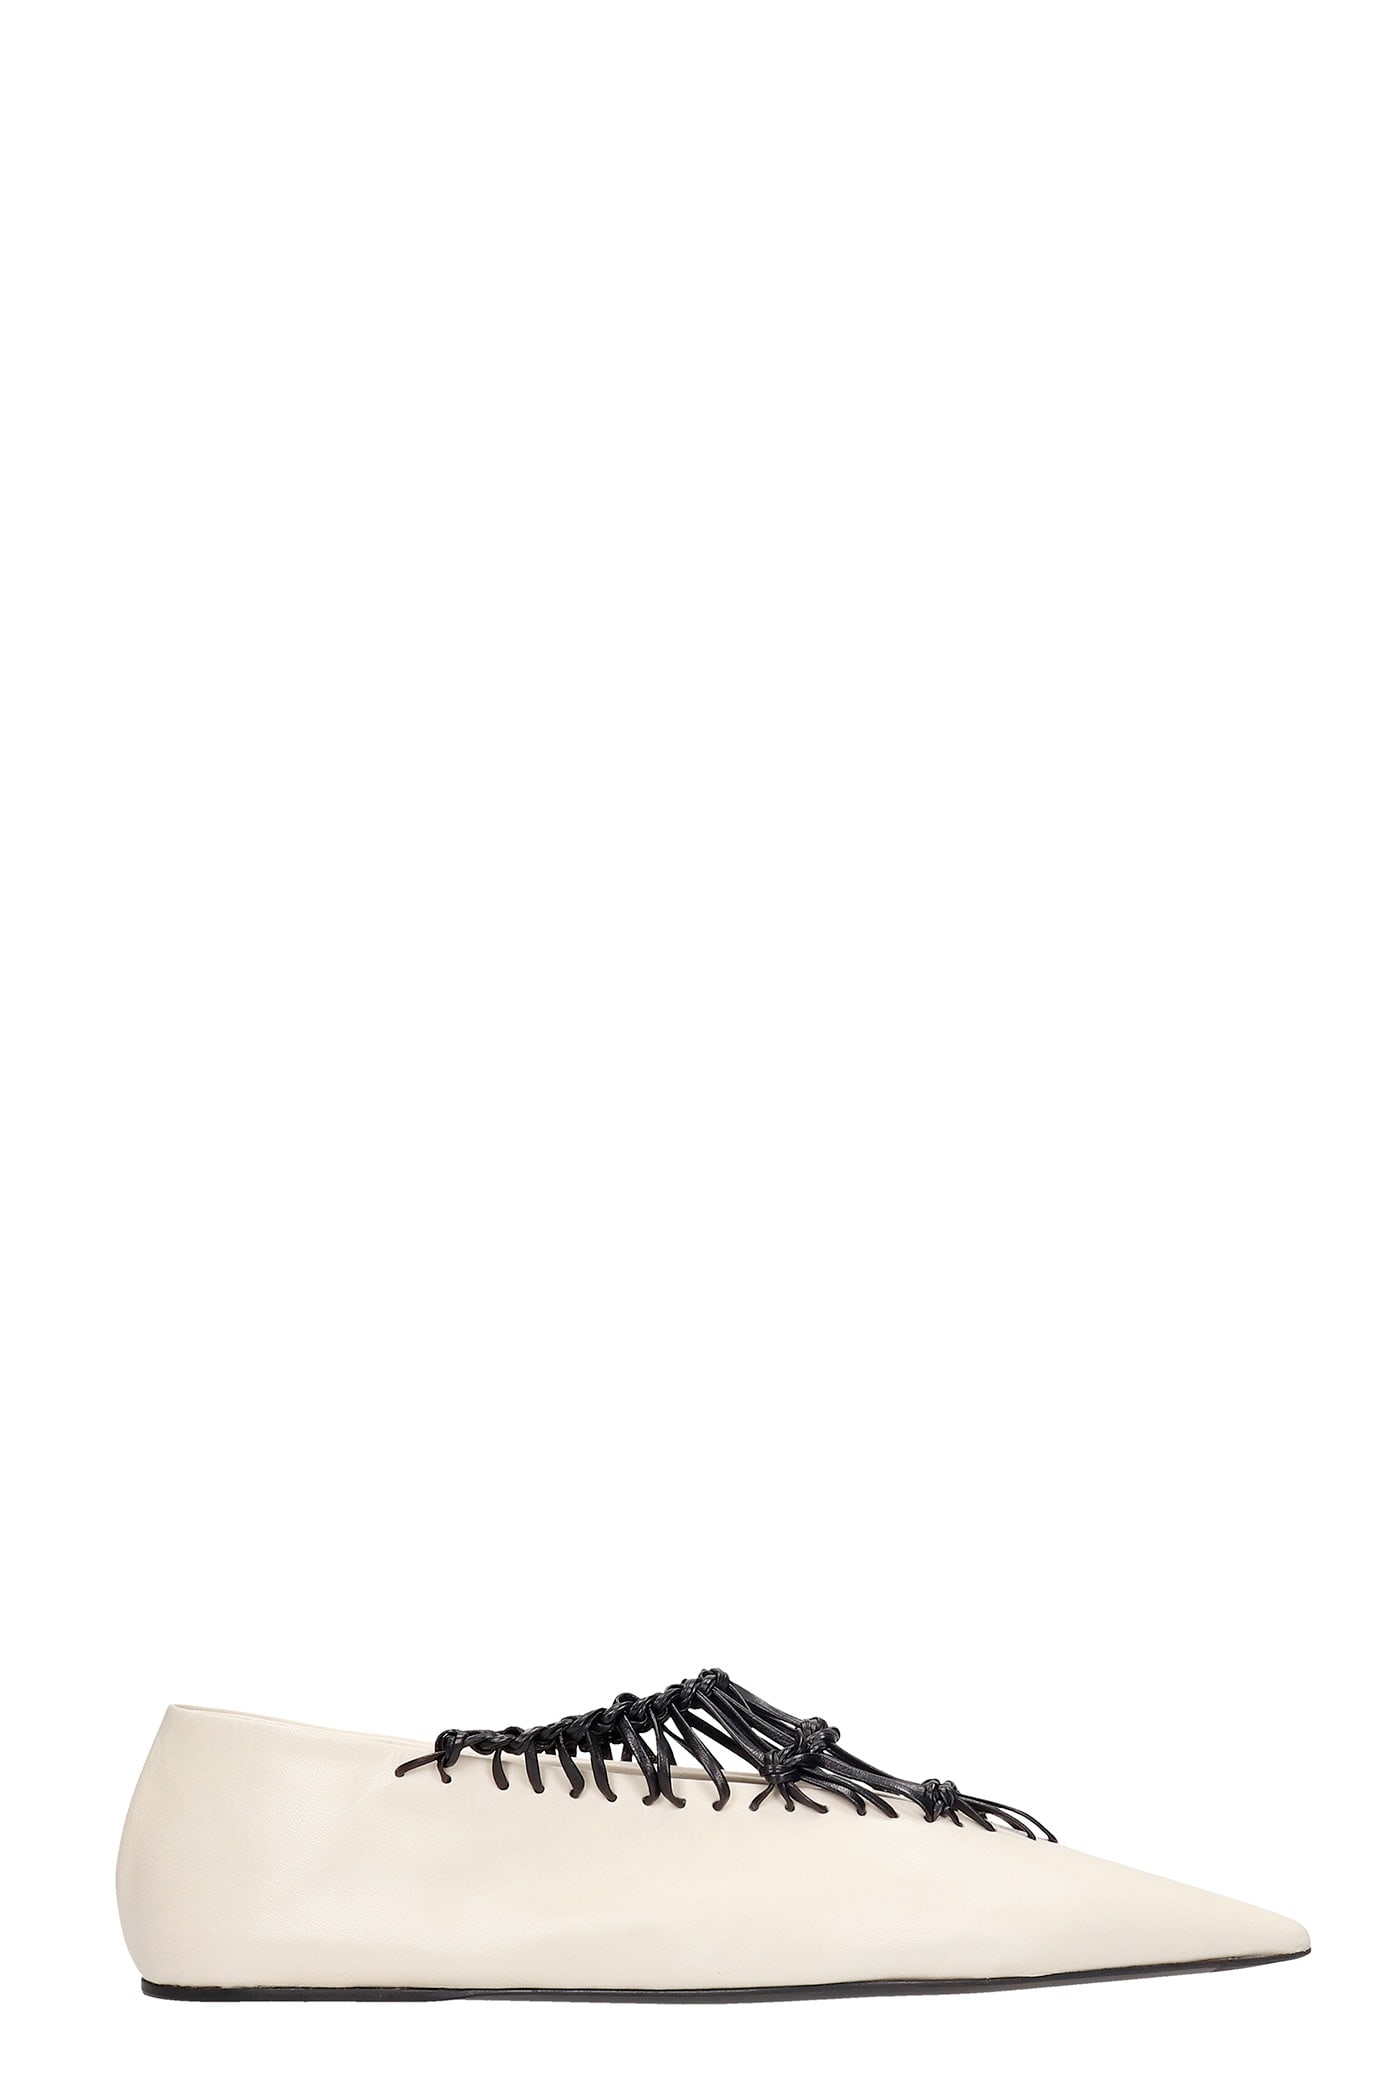 Buy Jil Sander Ballet Flats In Beige Leather online, shop Jil Sander shoes with free shipping